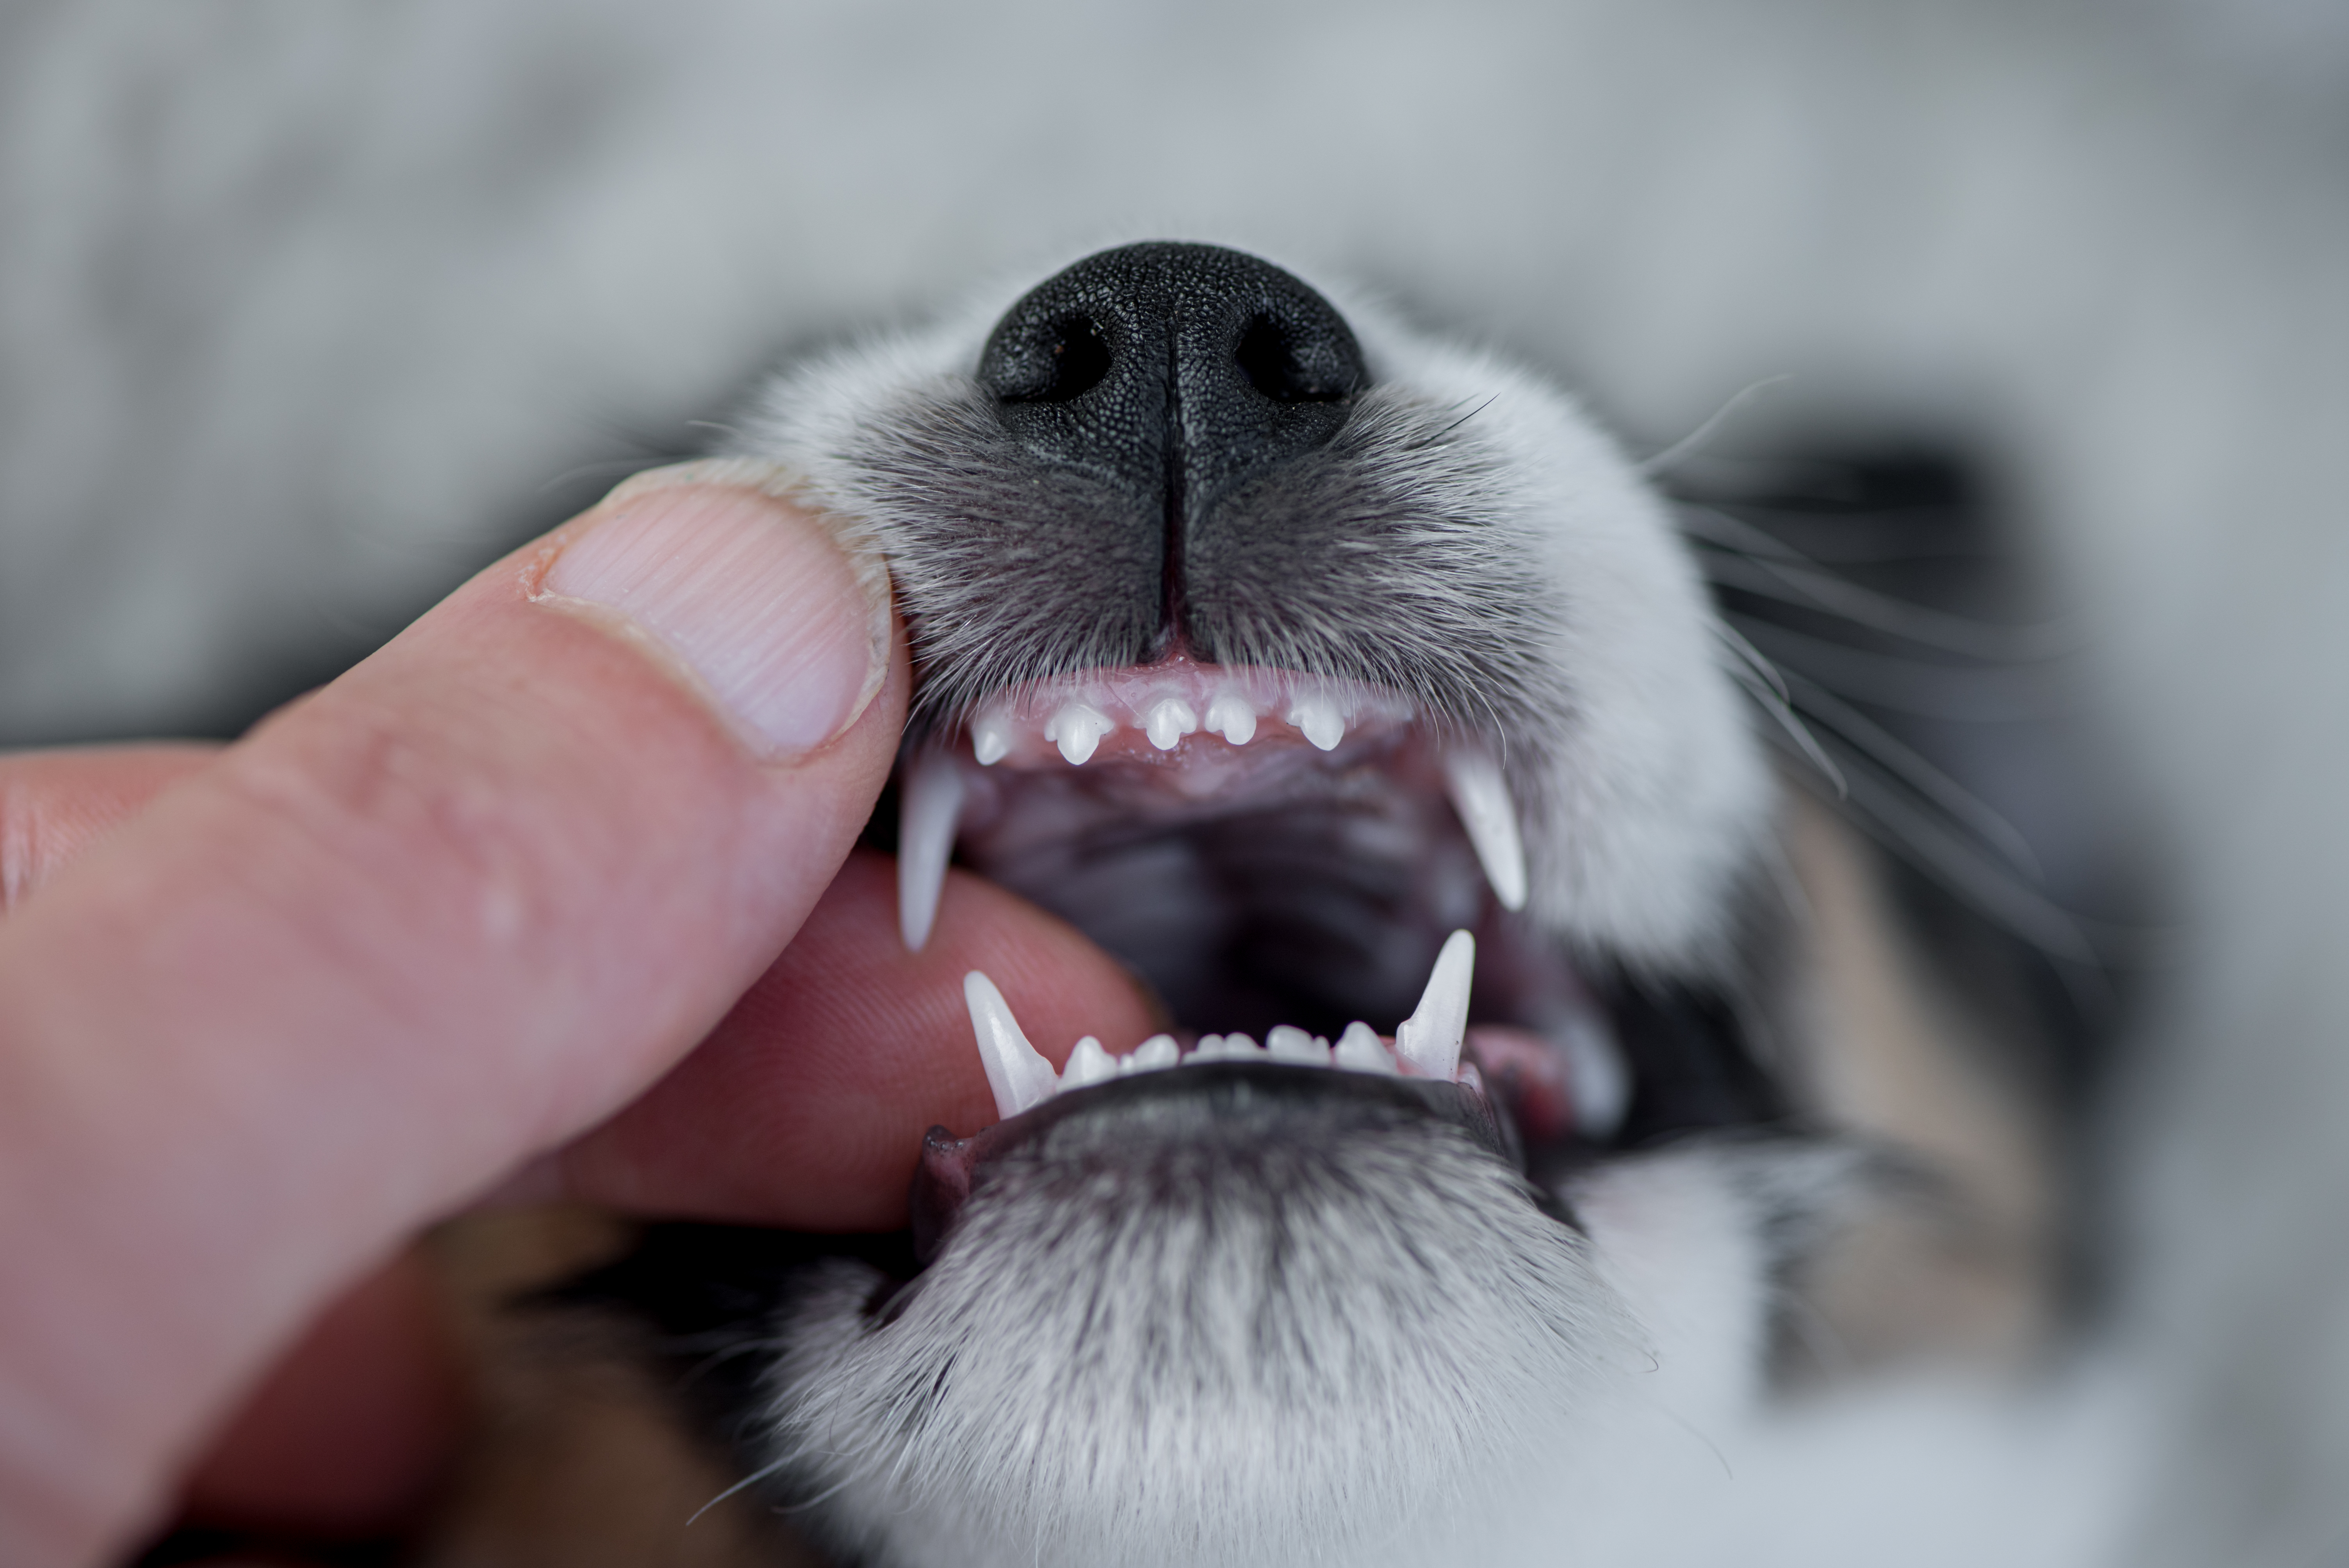 unhealthy dog gums